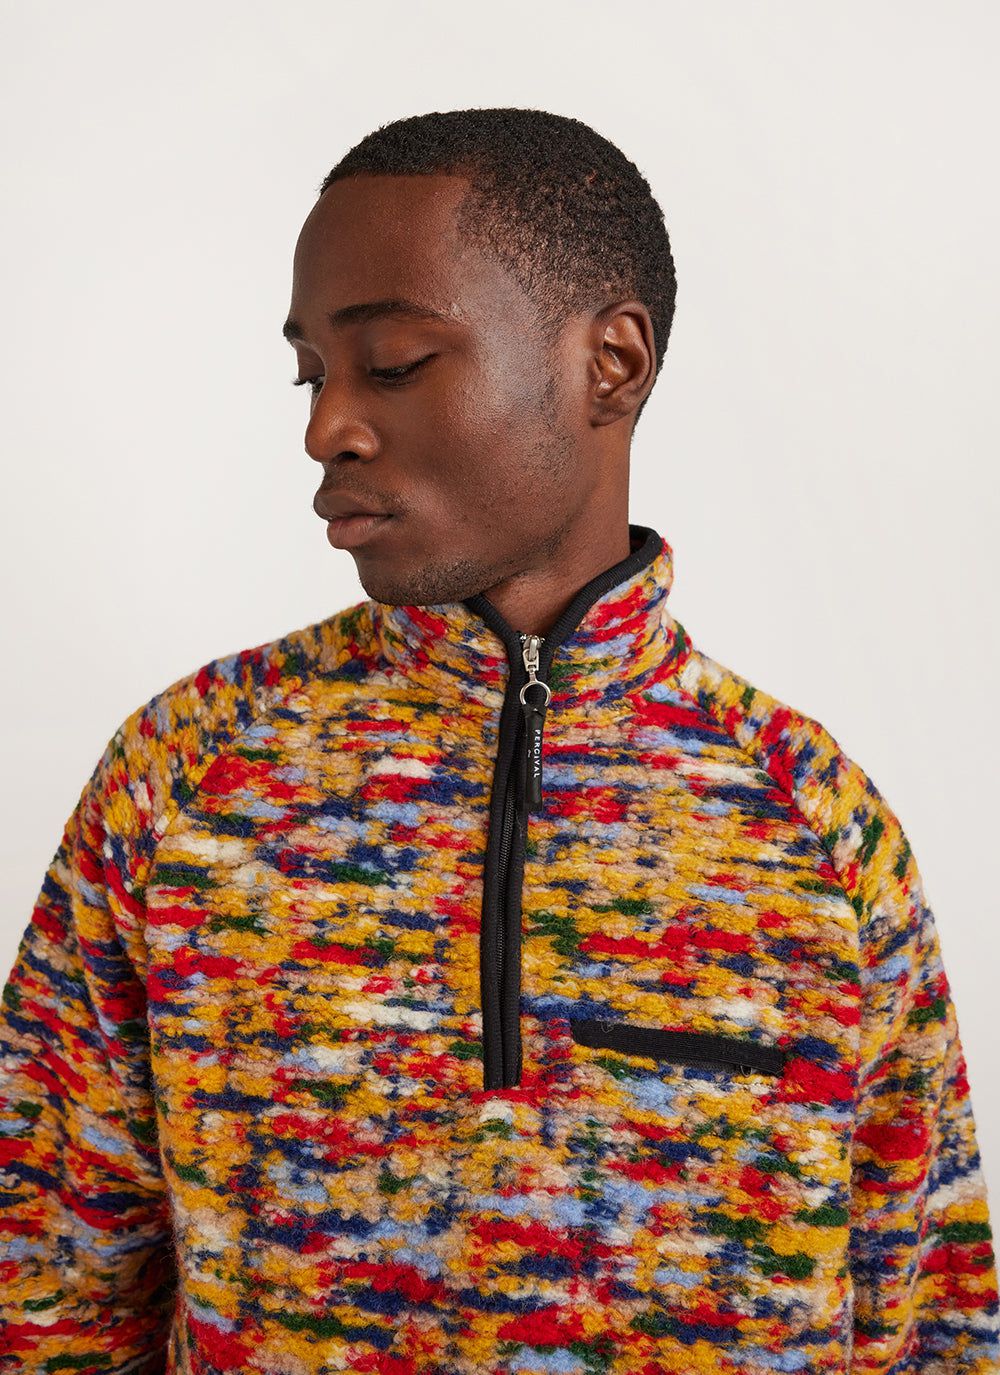 Percival Jacquard Fleece - Mid layer jackets 